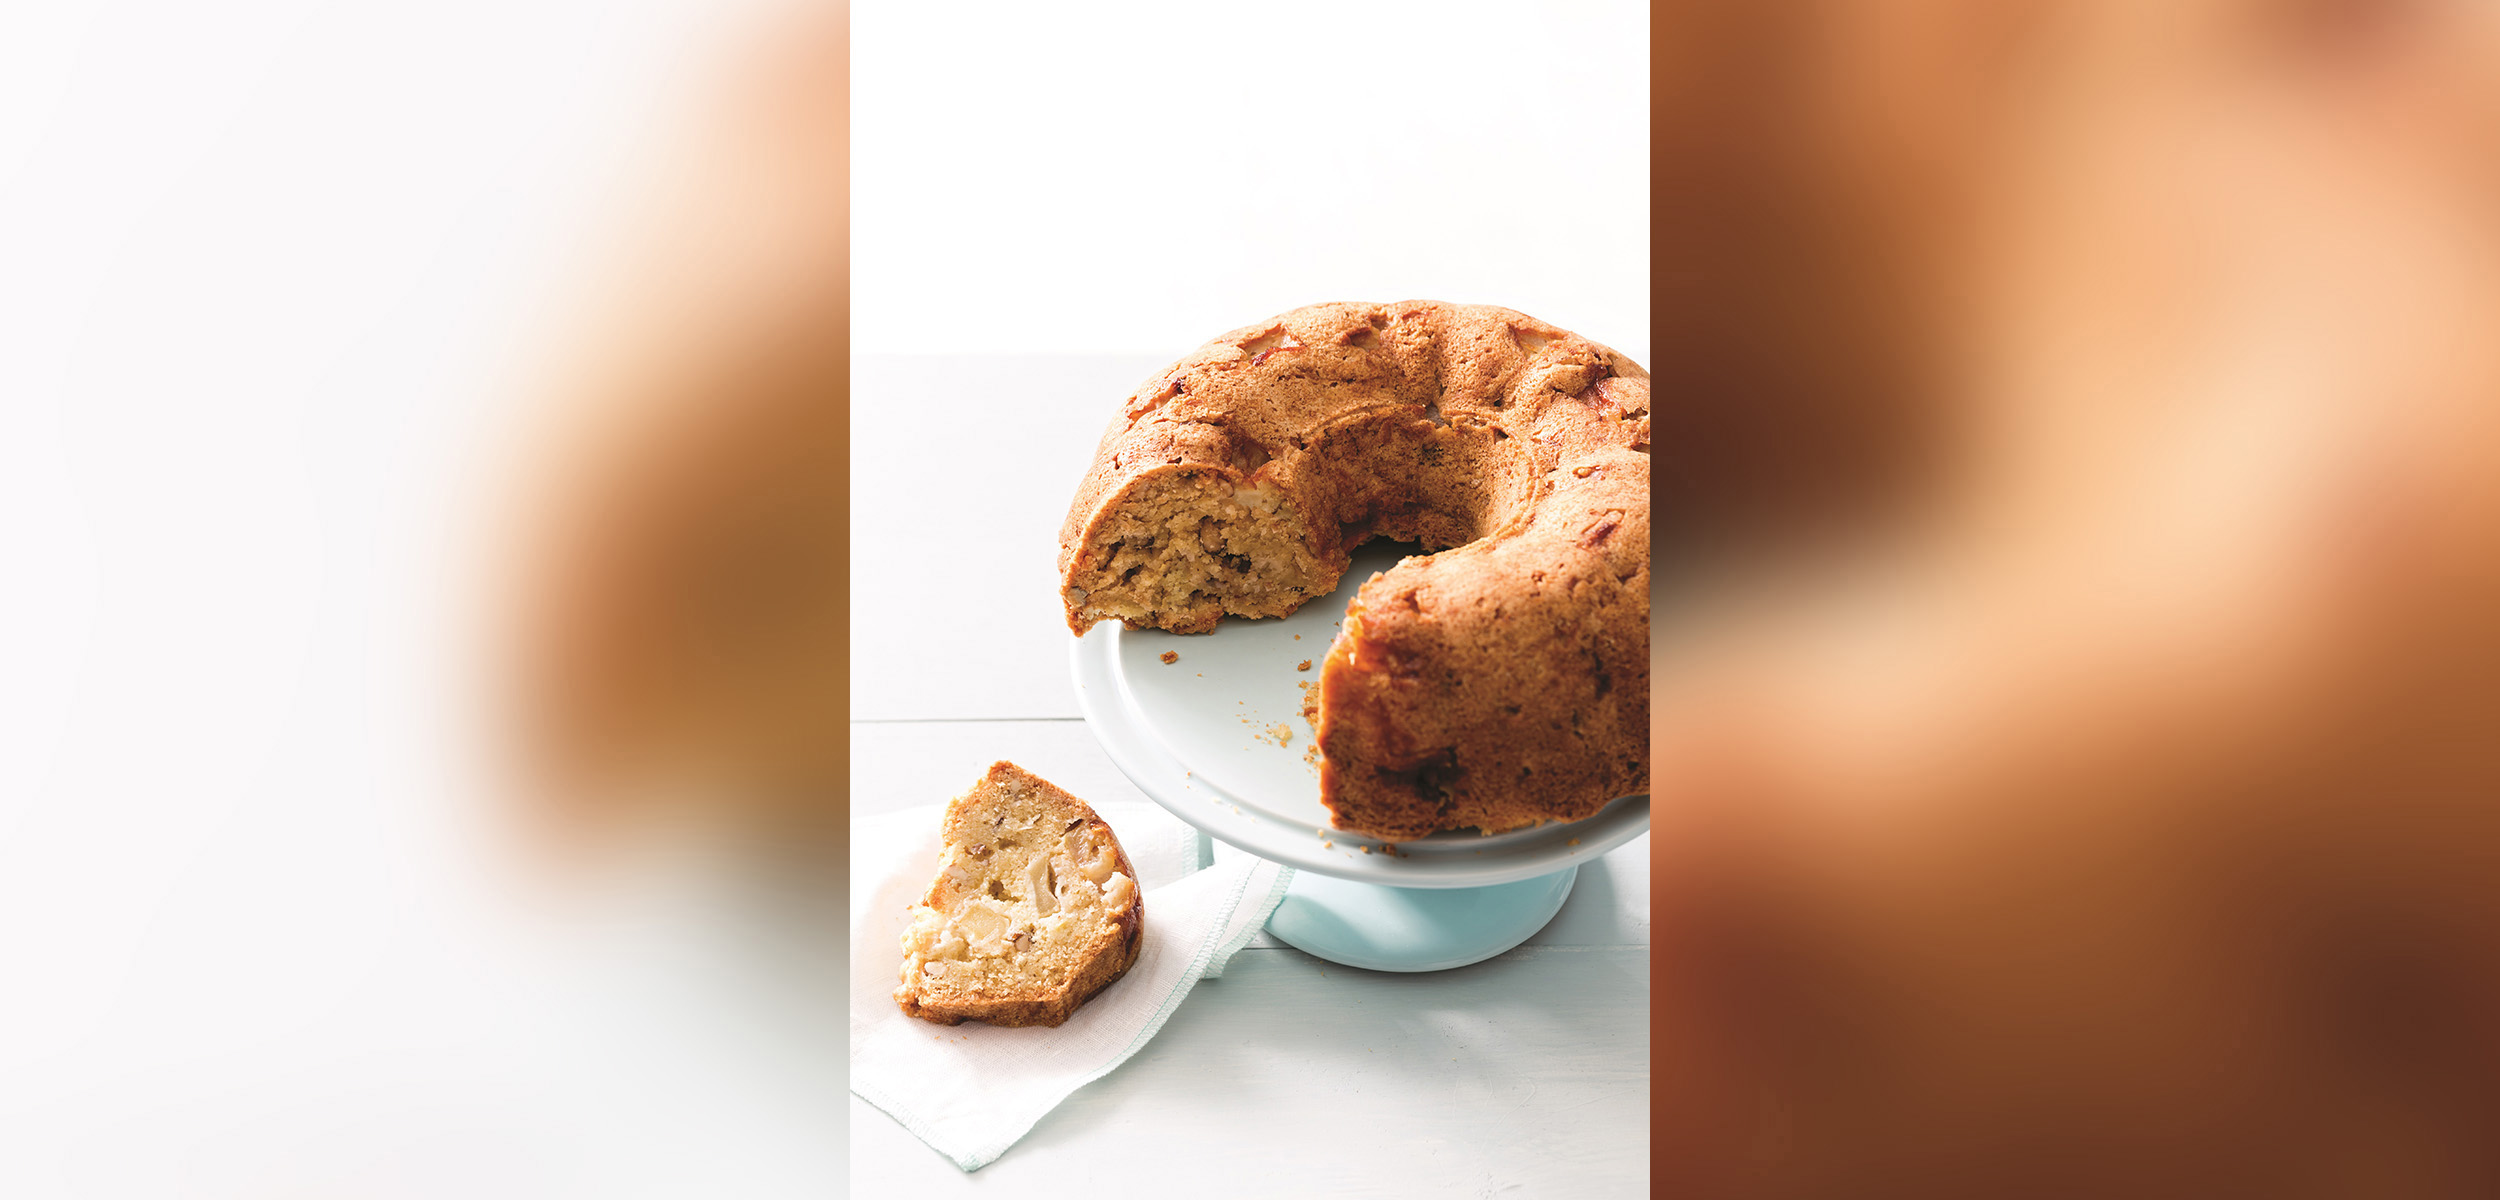 Kim Daisy of Daisy Cakes shares her recipe for apple-walnut pound cake from her new cookbook, "Daisy Cakes Bakes!"